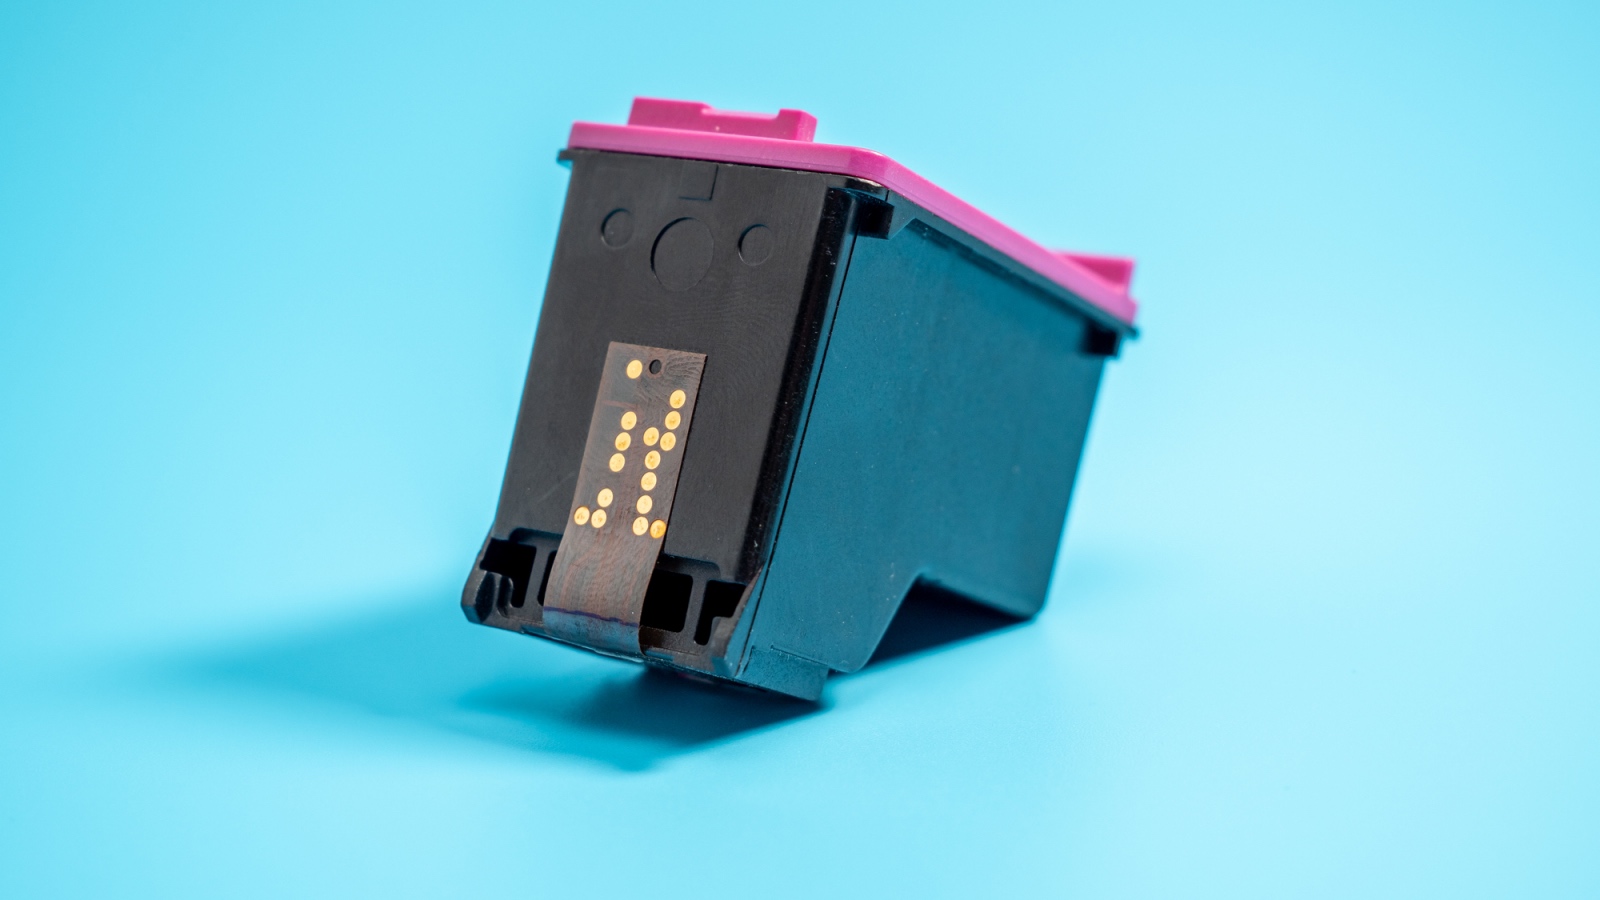 printer ink cartridge on blue background